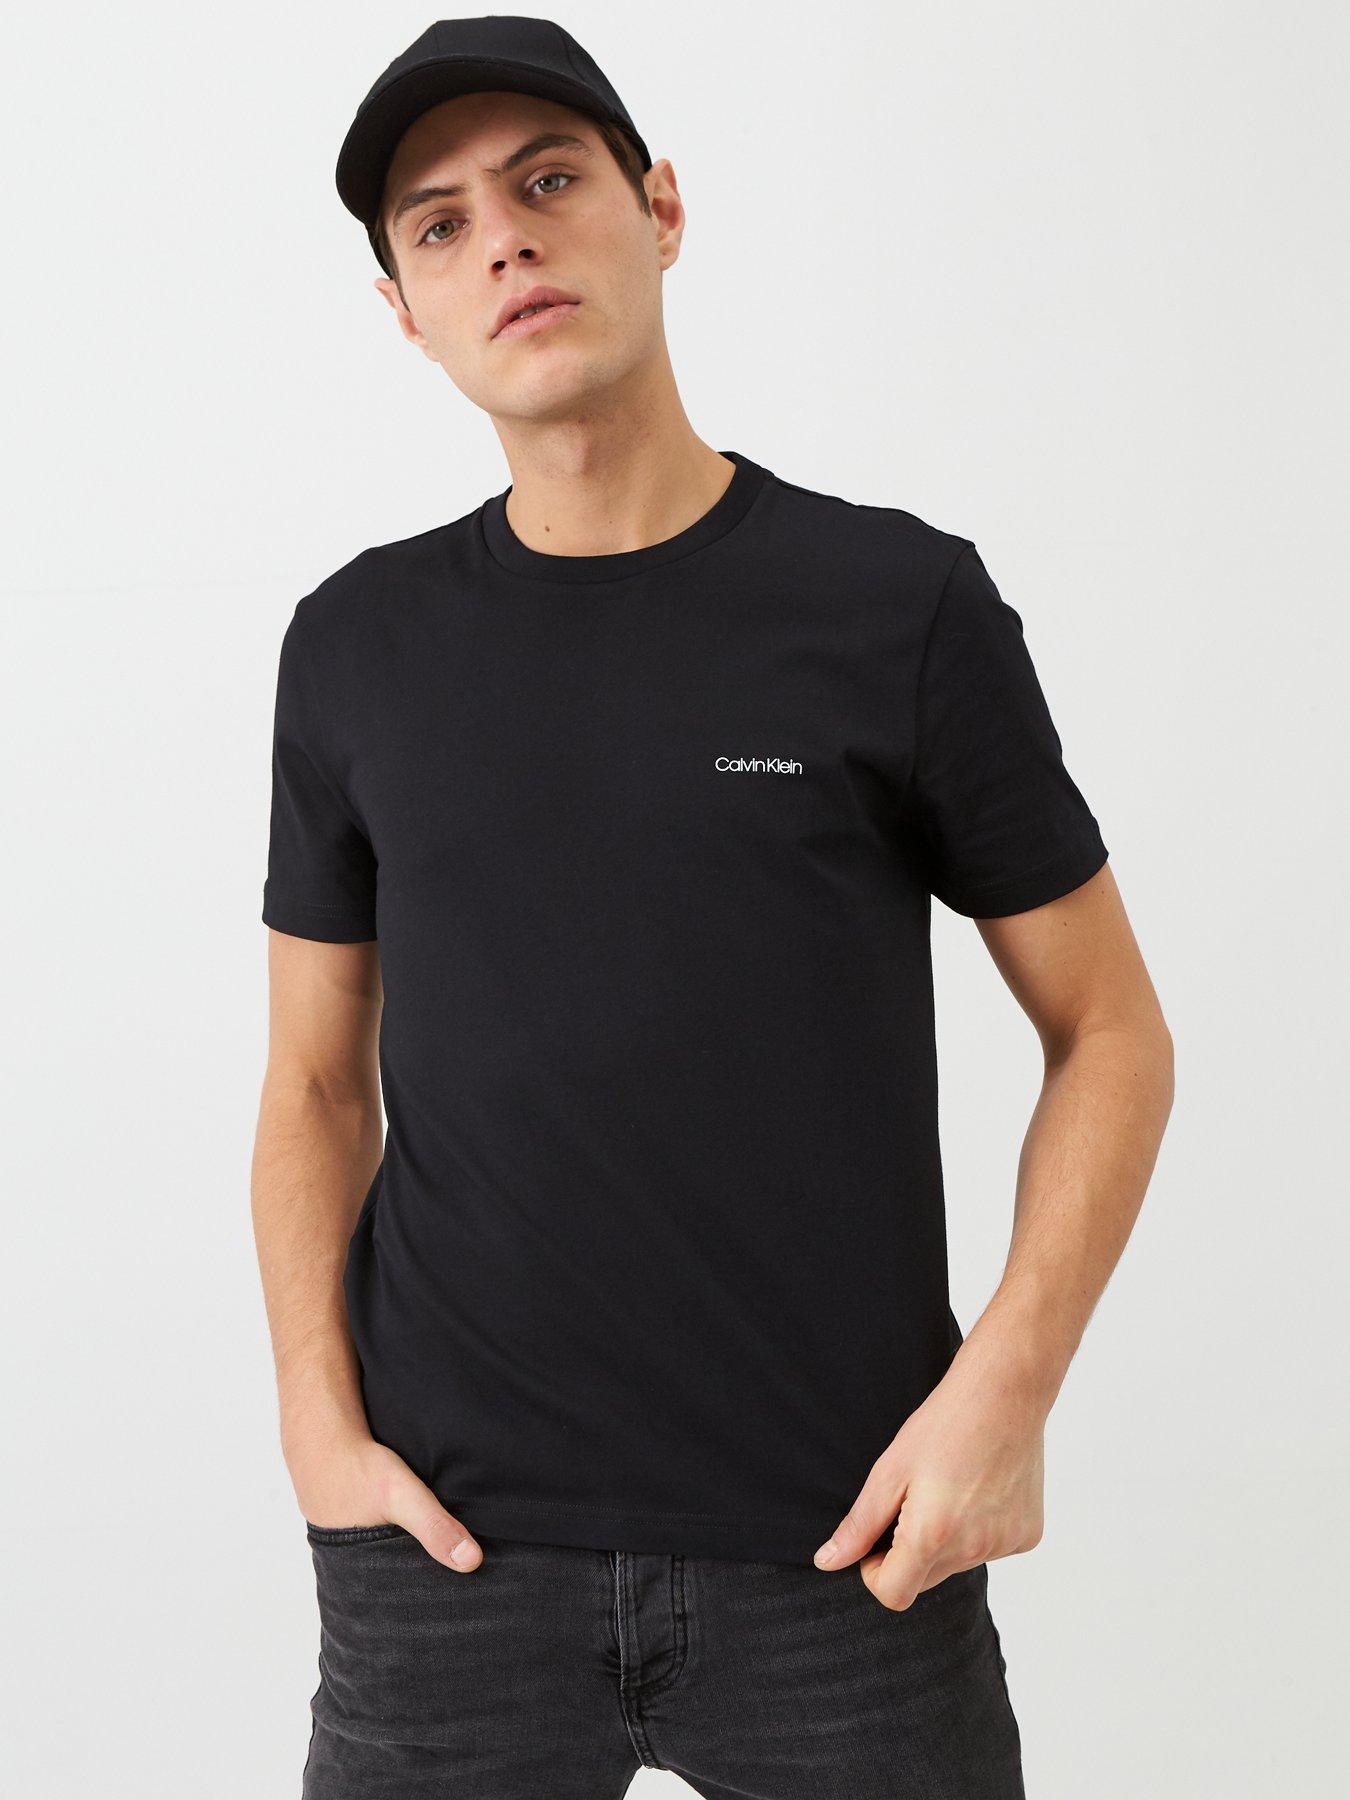 Klein Logo T-Shirt - Black | very.co.uk